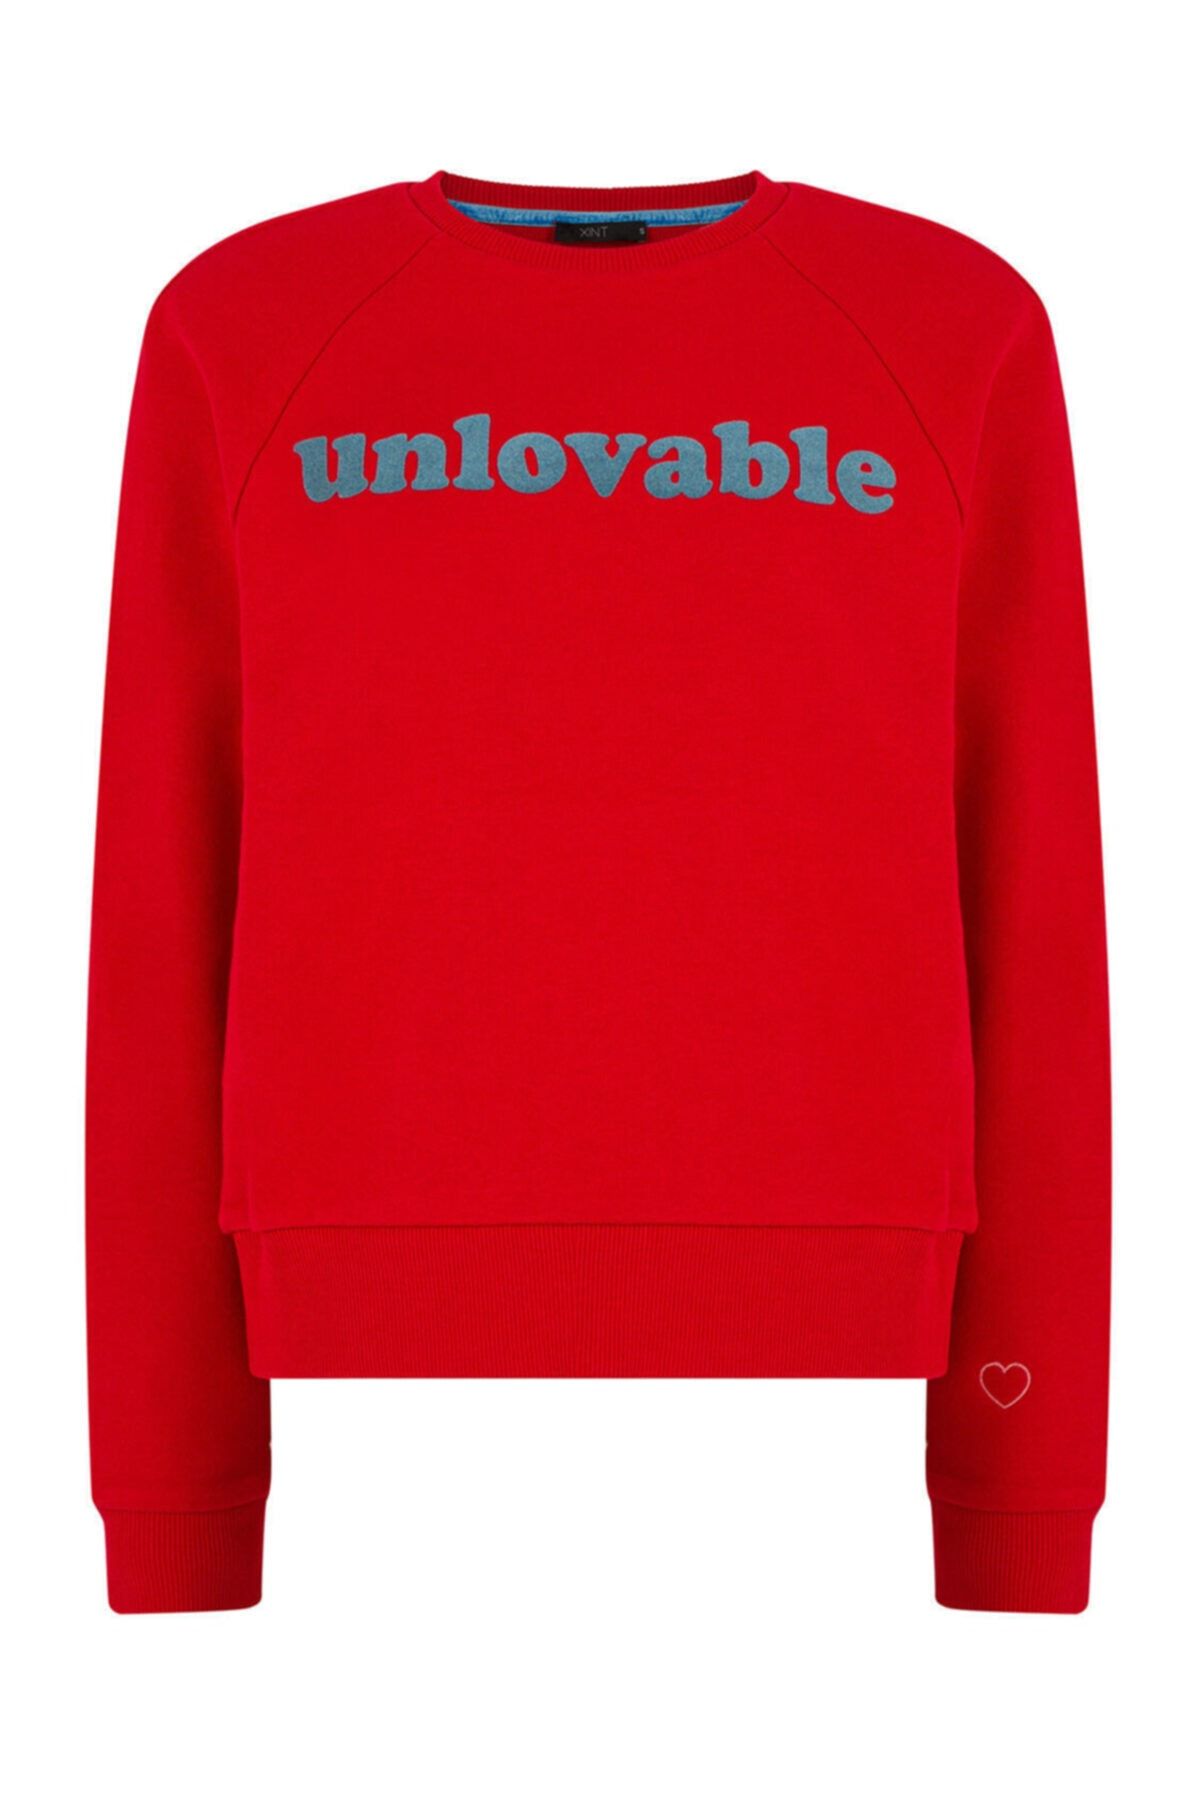 Xint Kadın Kırmızı Pamuklu Rahat Kesim Baskılı Vatkalı Sweatshirt